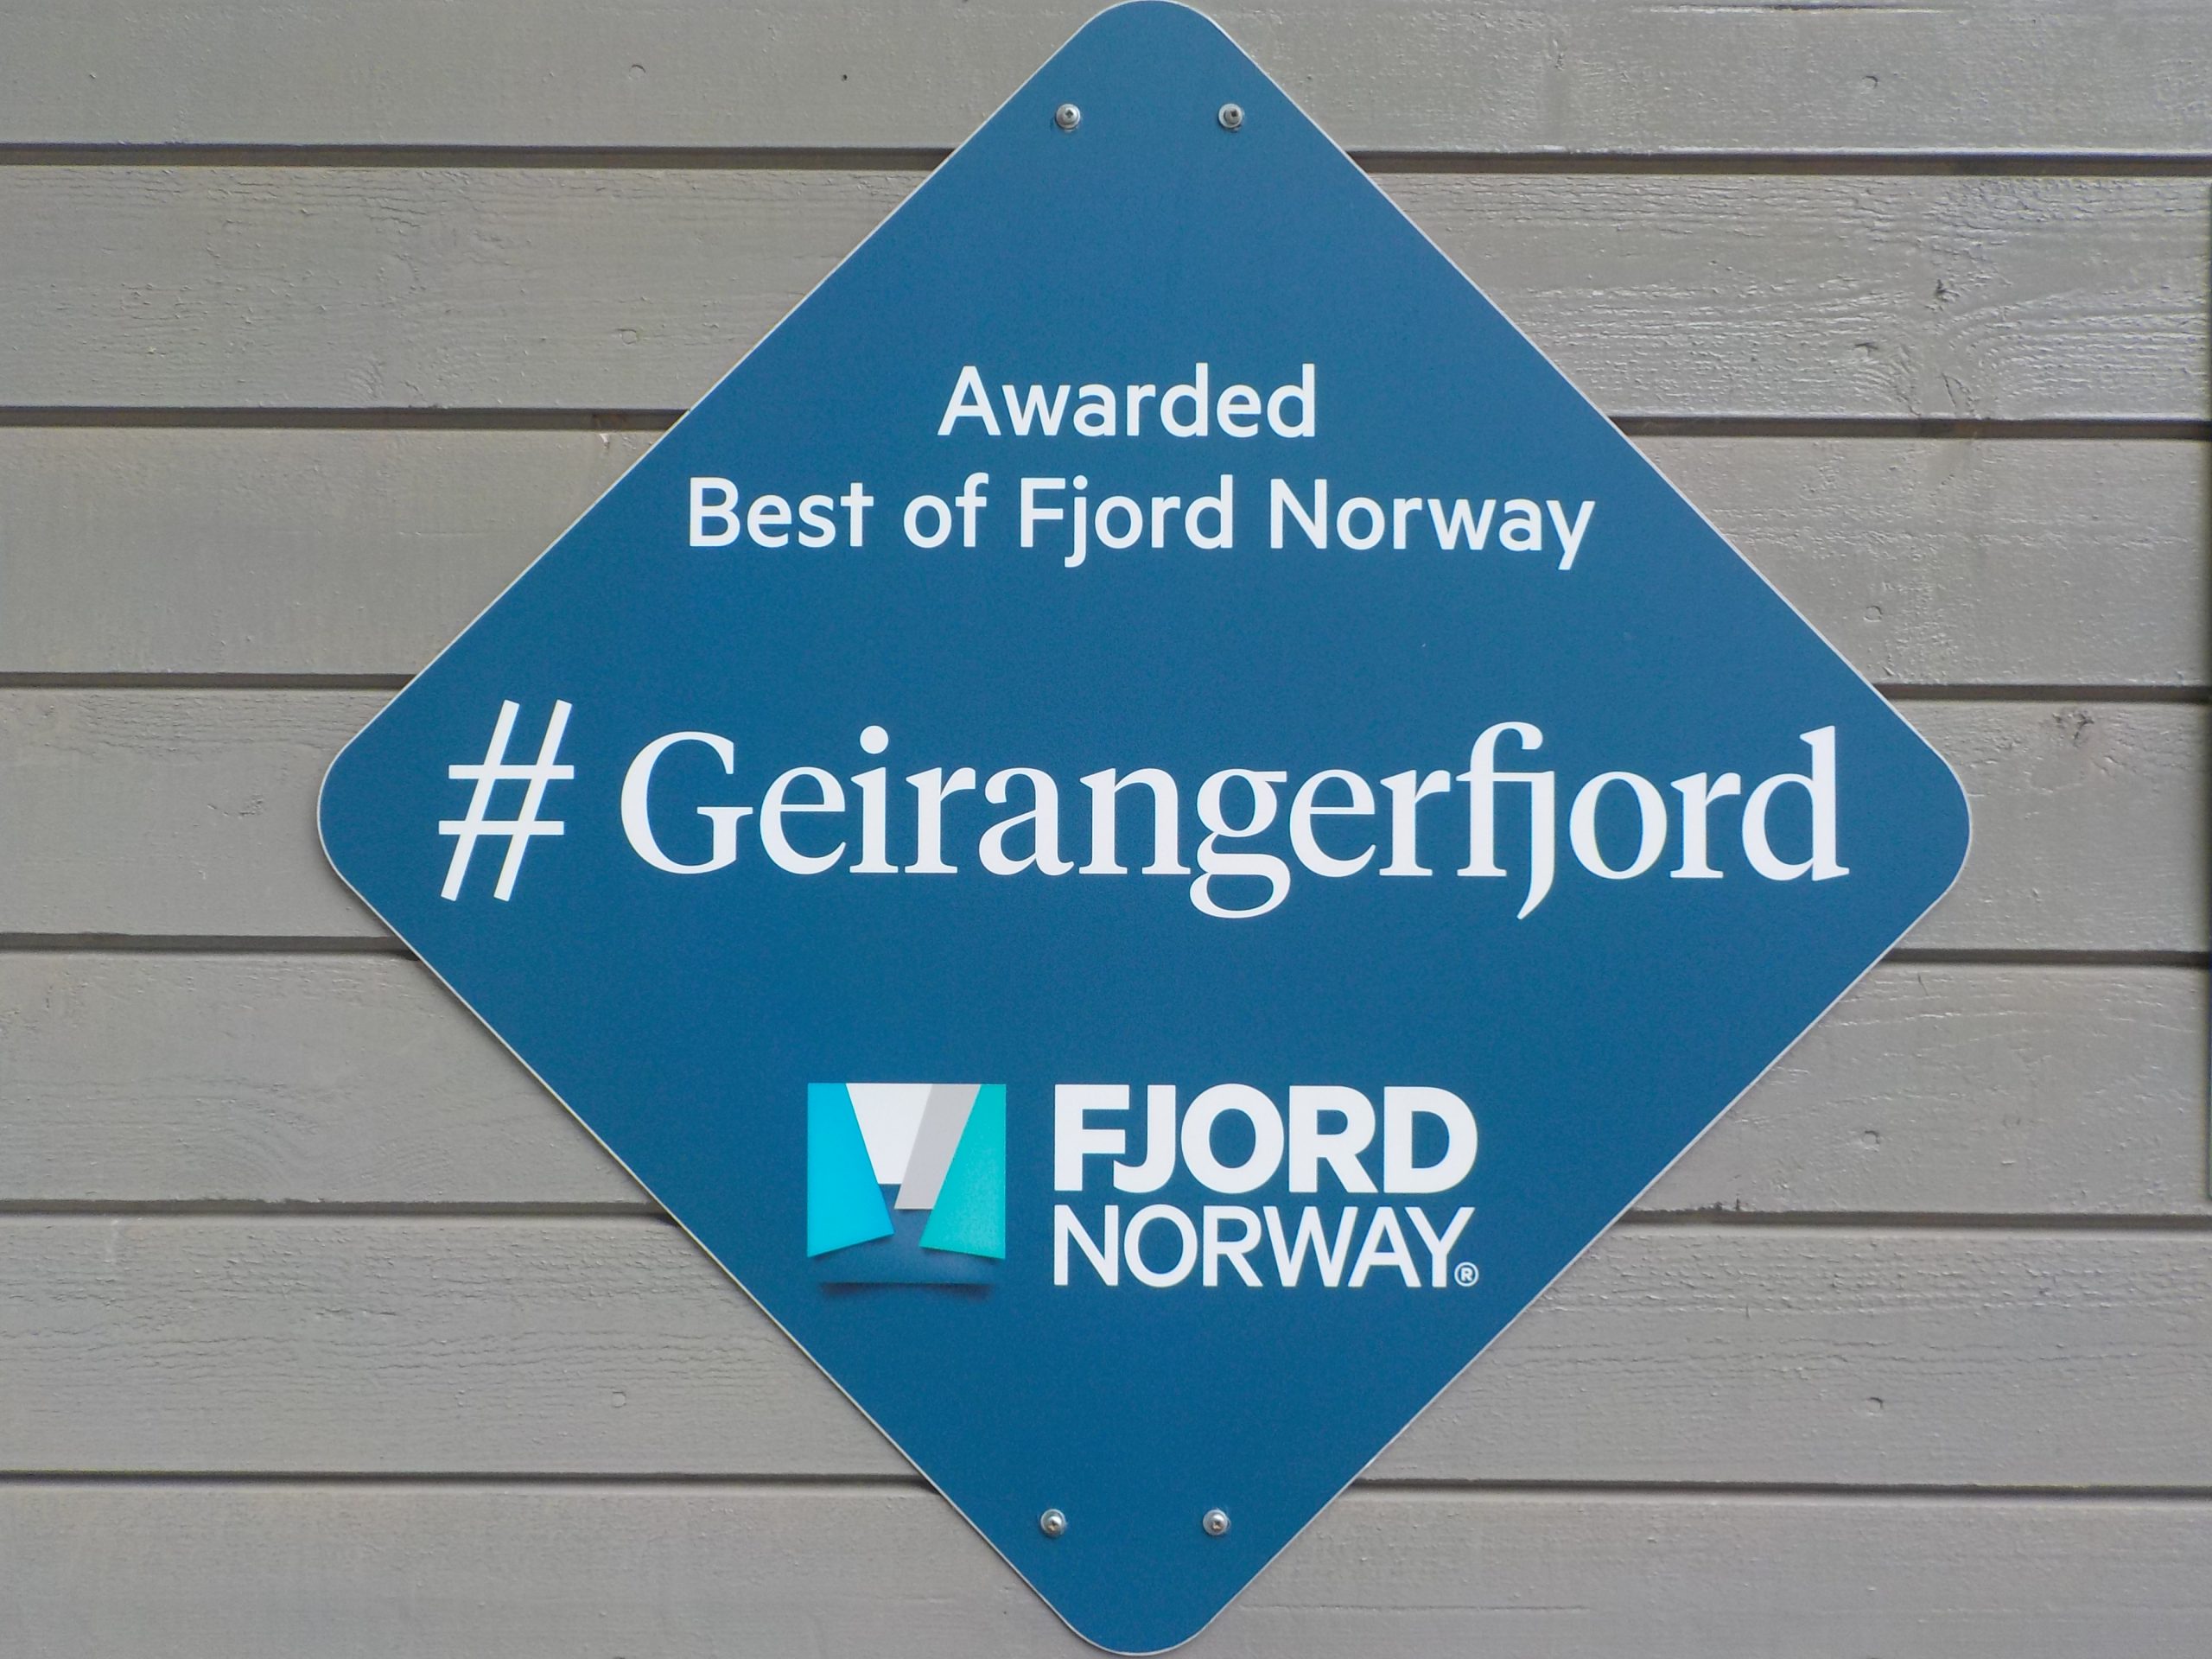 Geirangerfjord Norway awarded best fjord